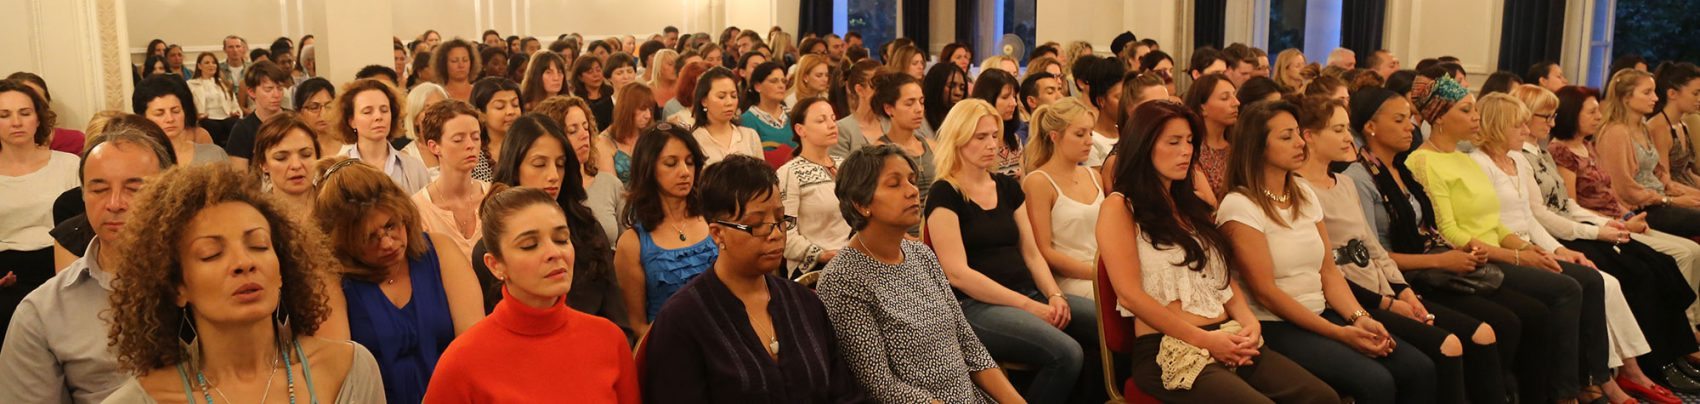 MeditationEvening Crowd - ThetaHealing® Meditation Evening and Sound Bath - Manifesting Soul Mates